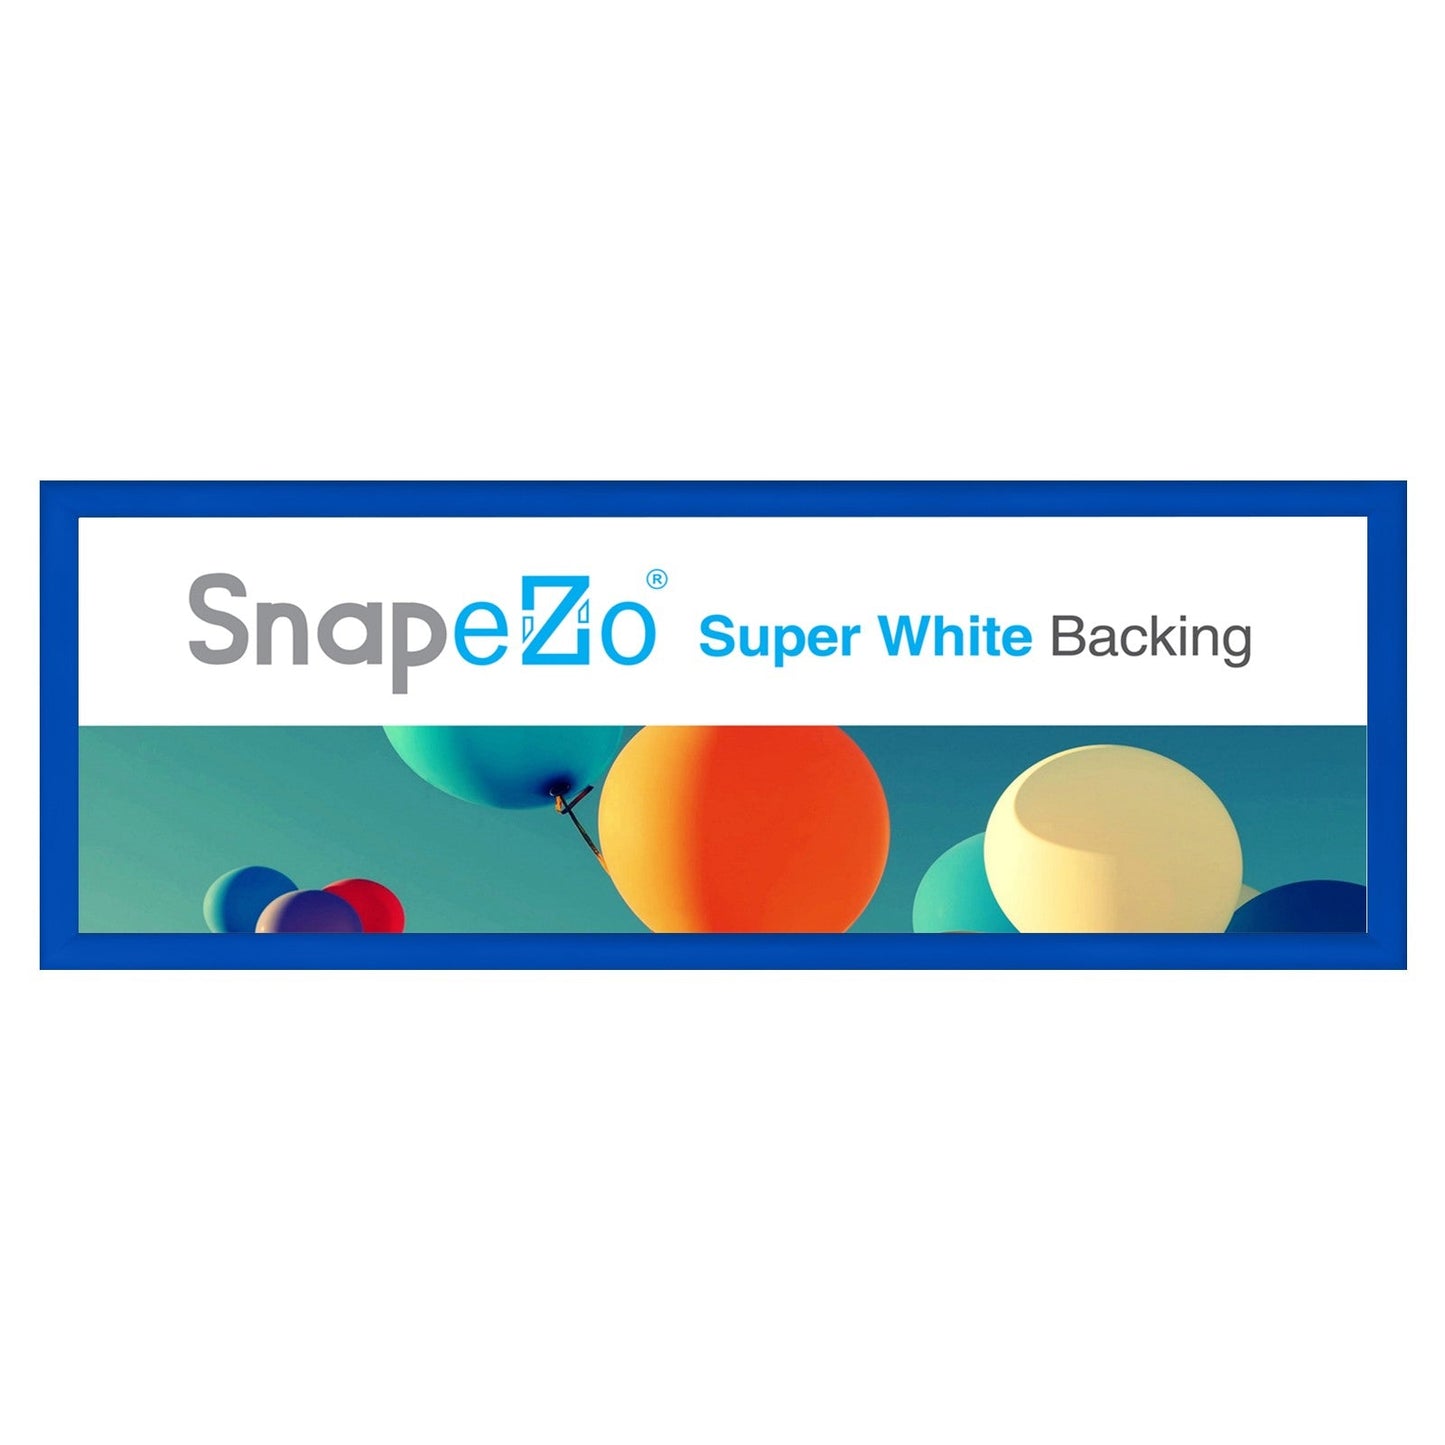 10x29 Blue SnapeZo® Snap Frame - 1.2" Profile